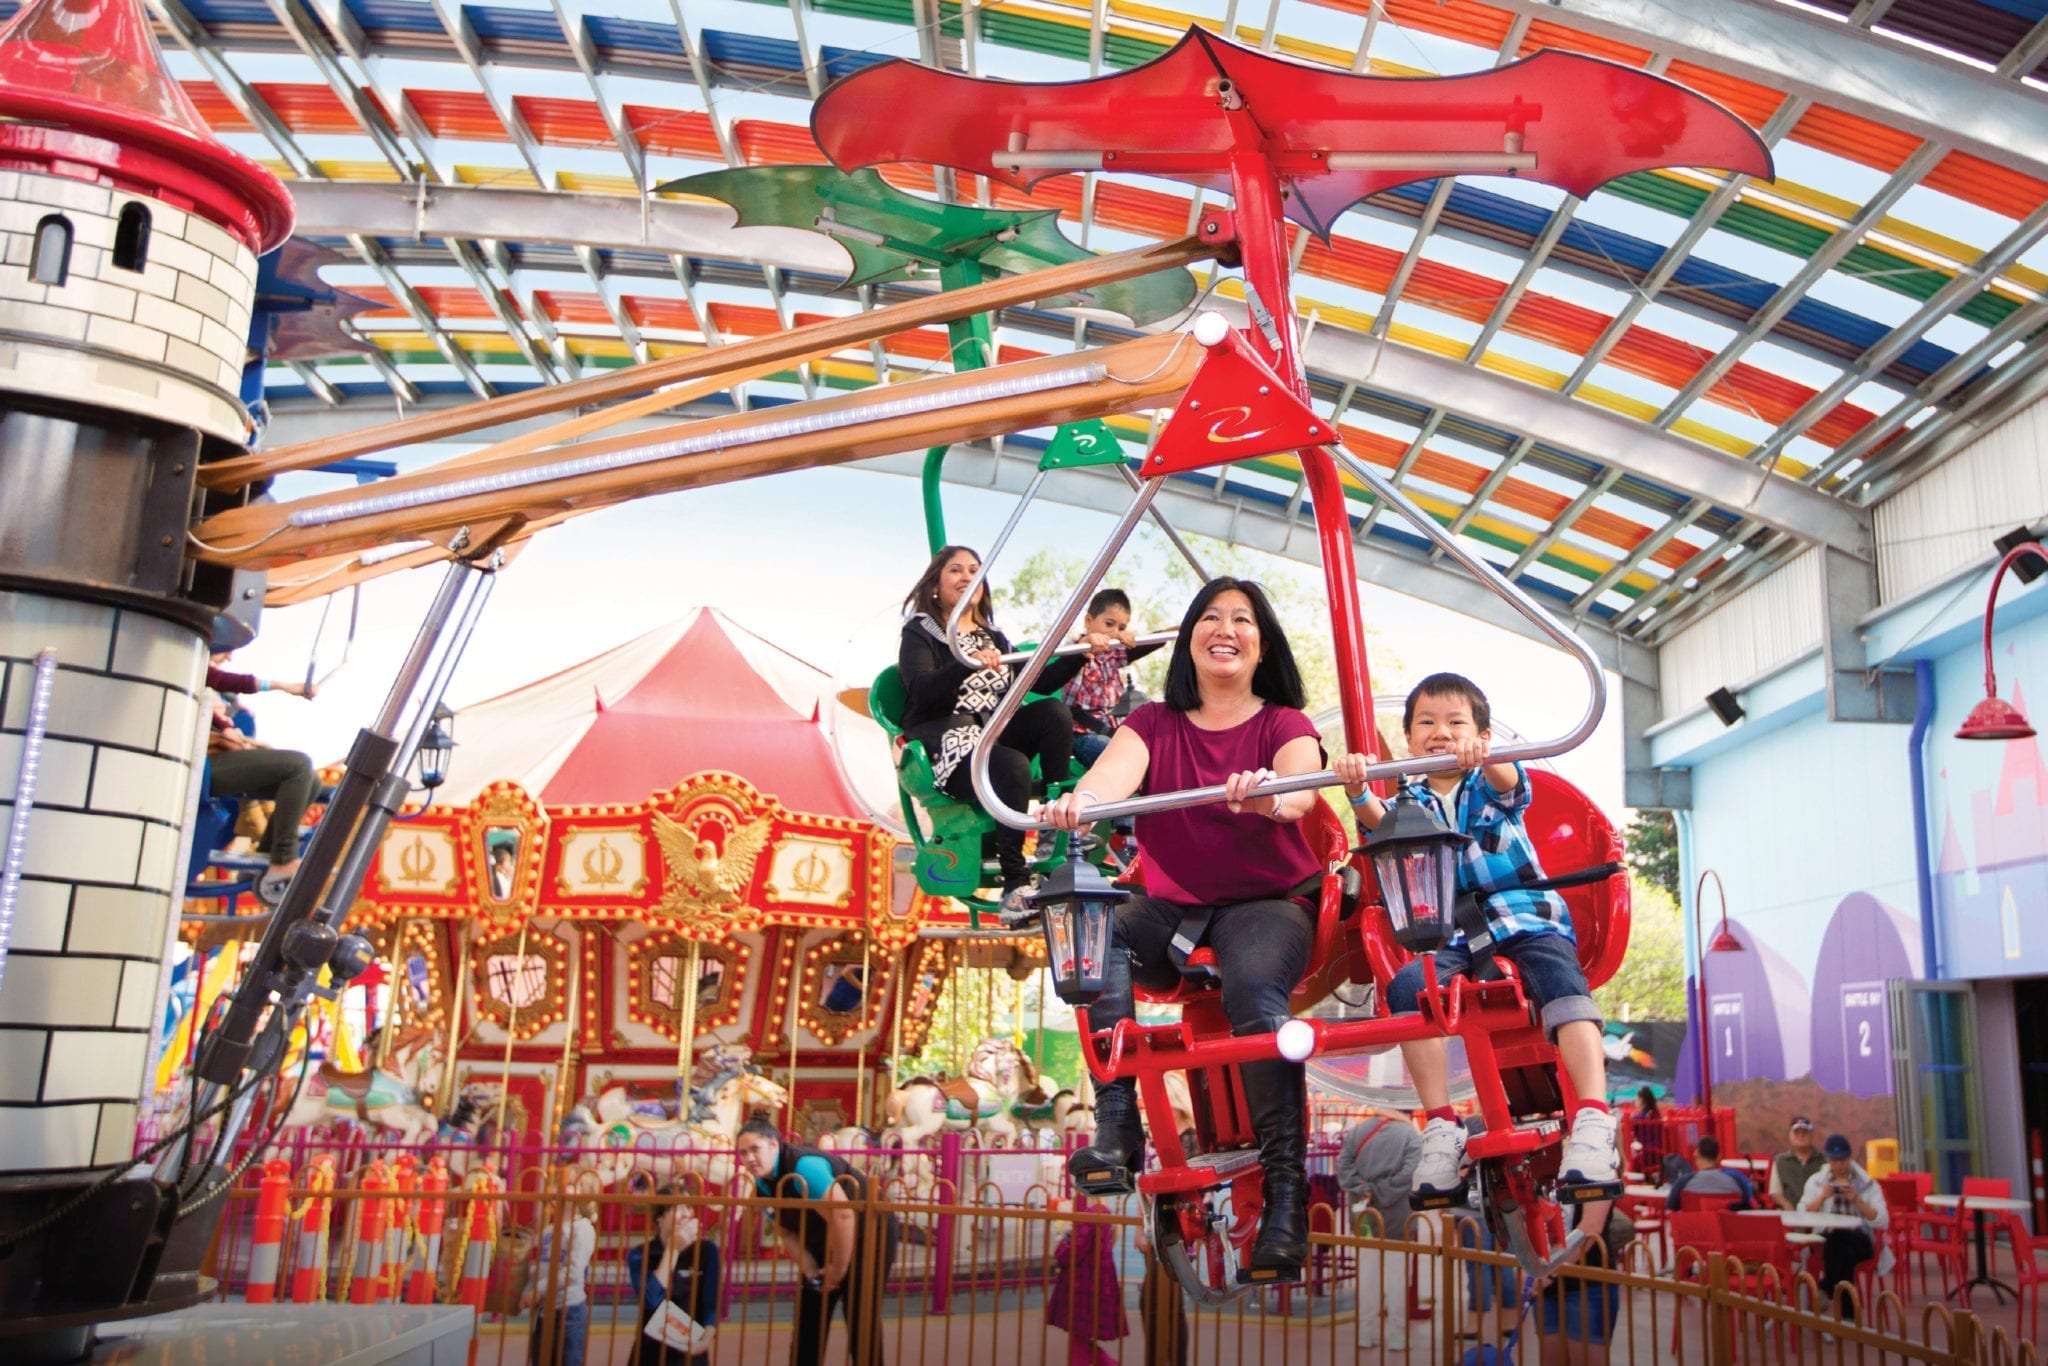 Magic Bikes at Kidz Kingdom in Rainbow's End theme park | Auckland for Kids